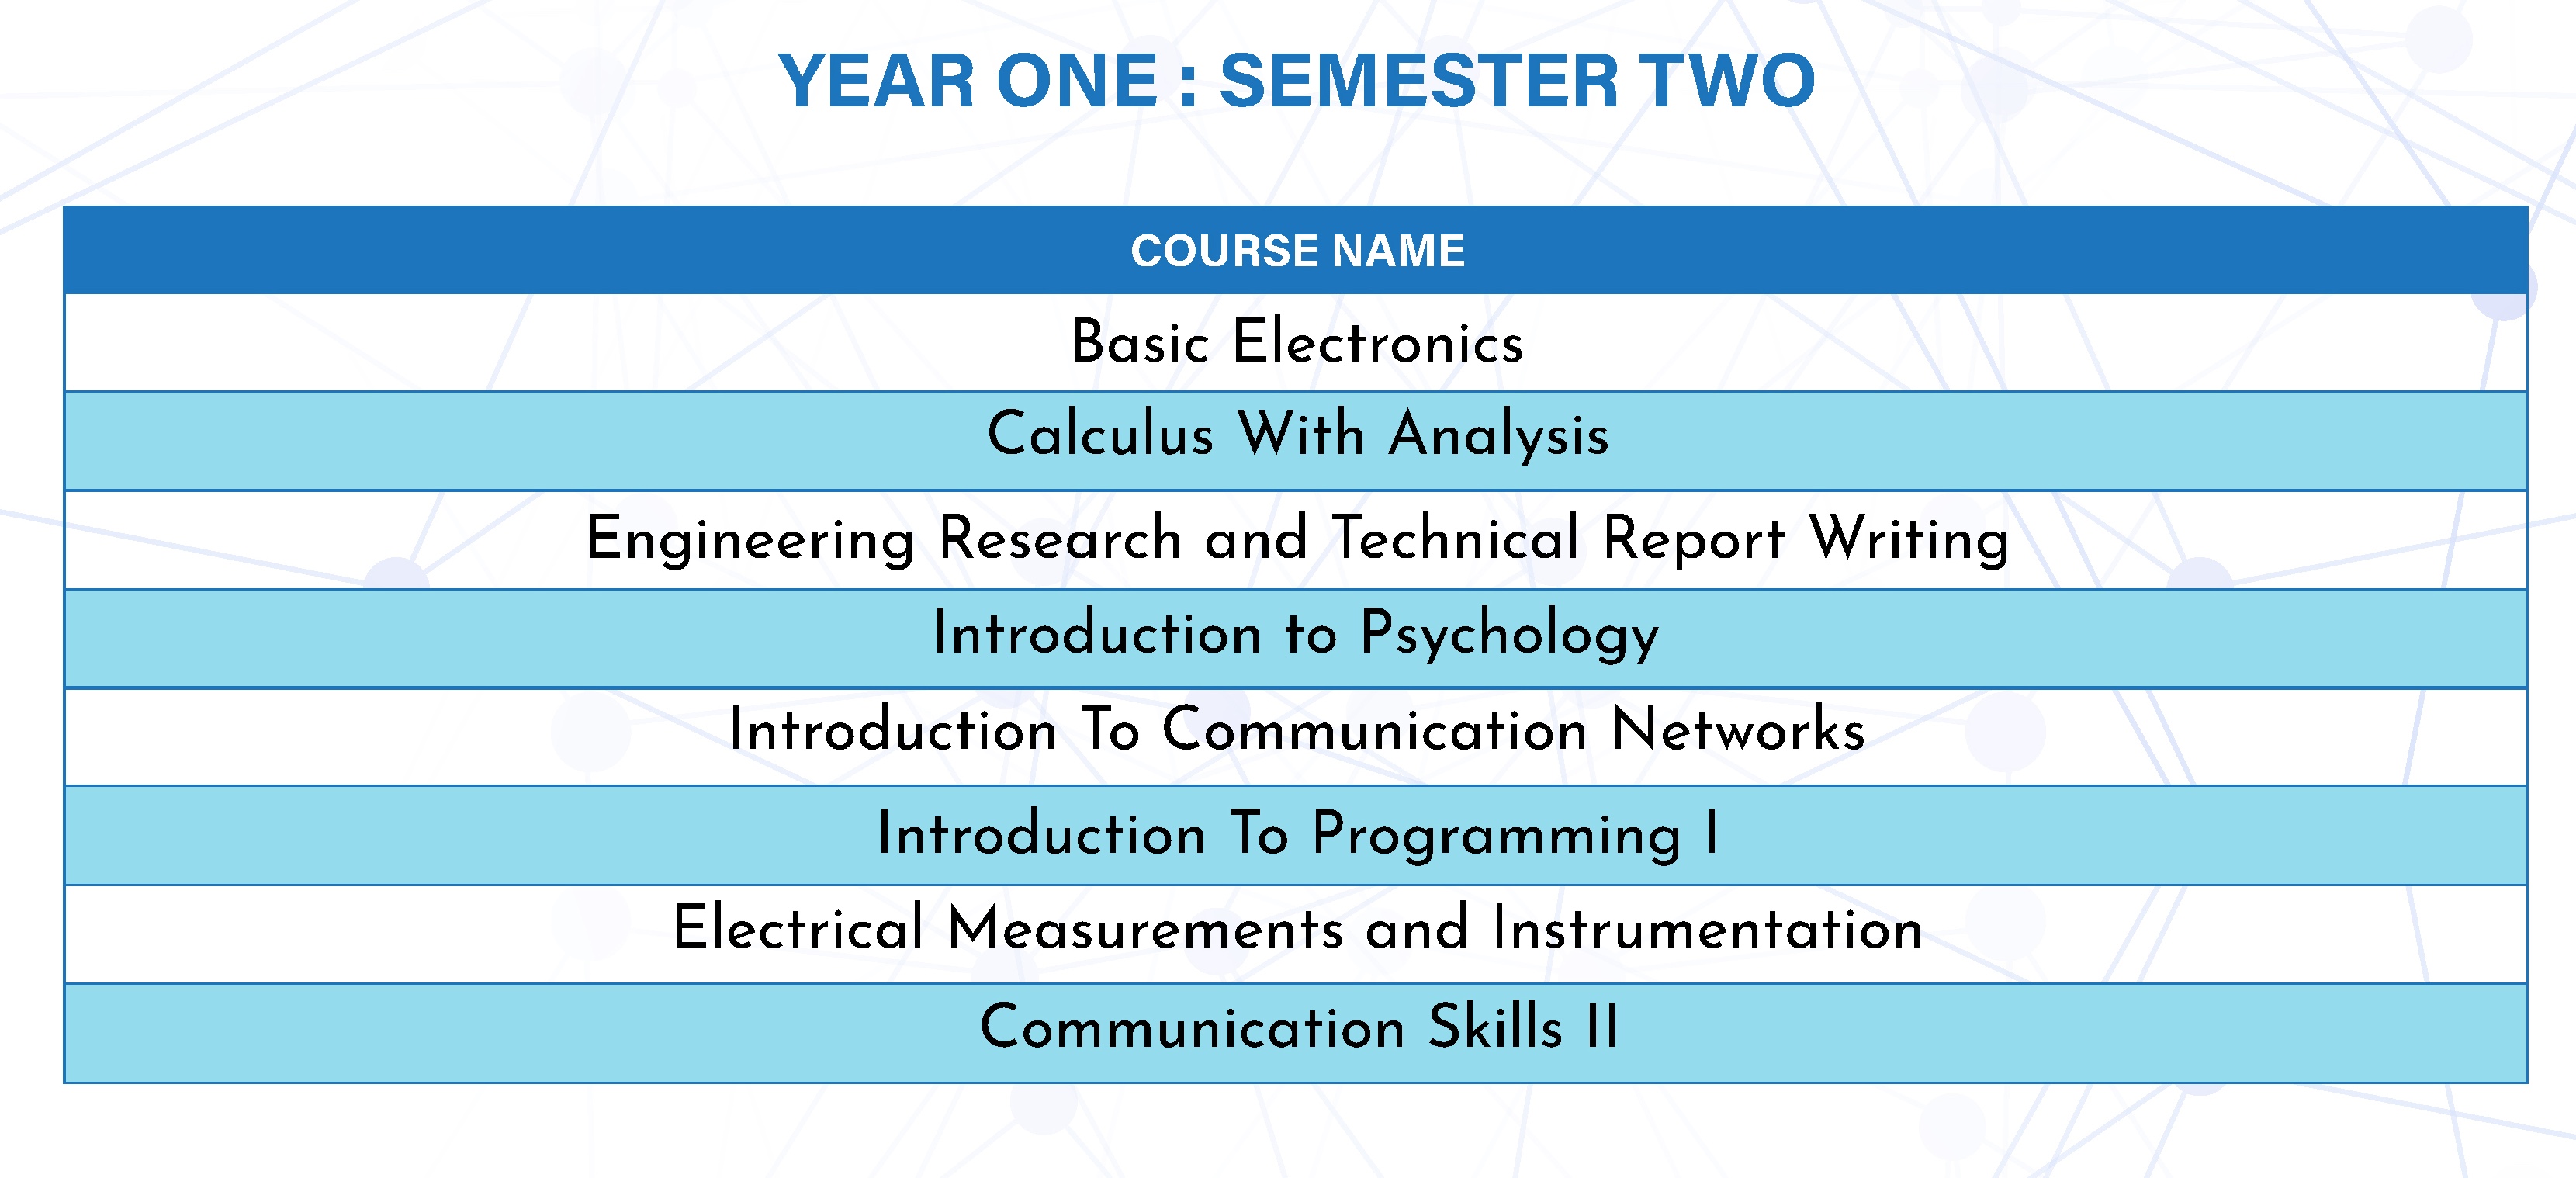 undergraduate year 1 semester 2 courses